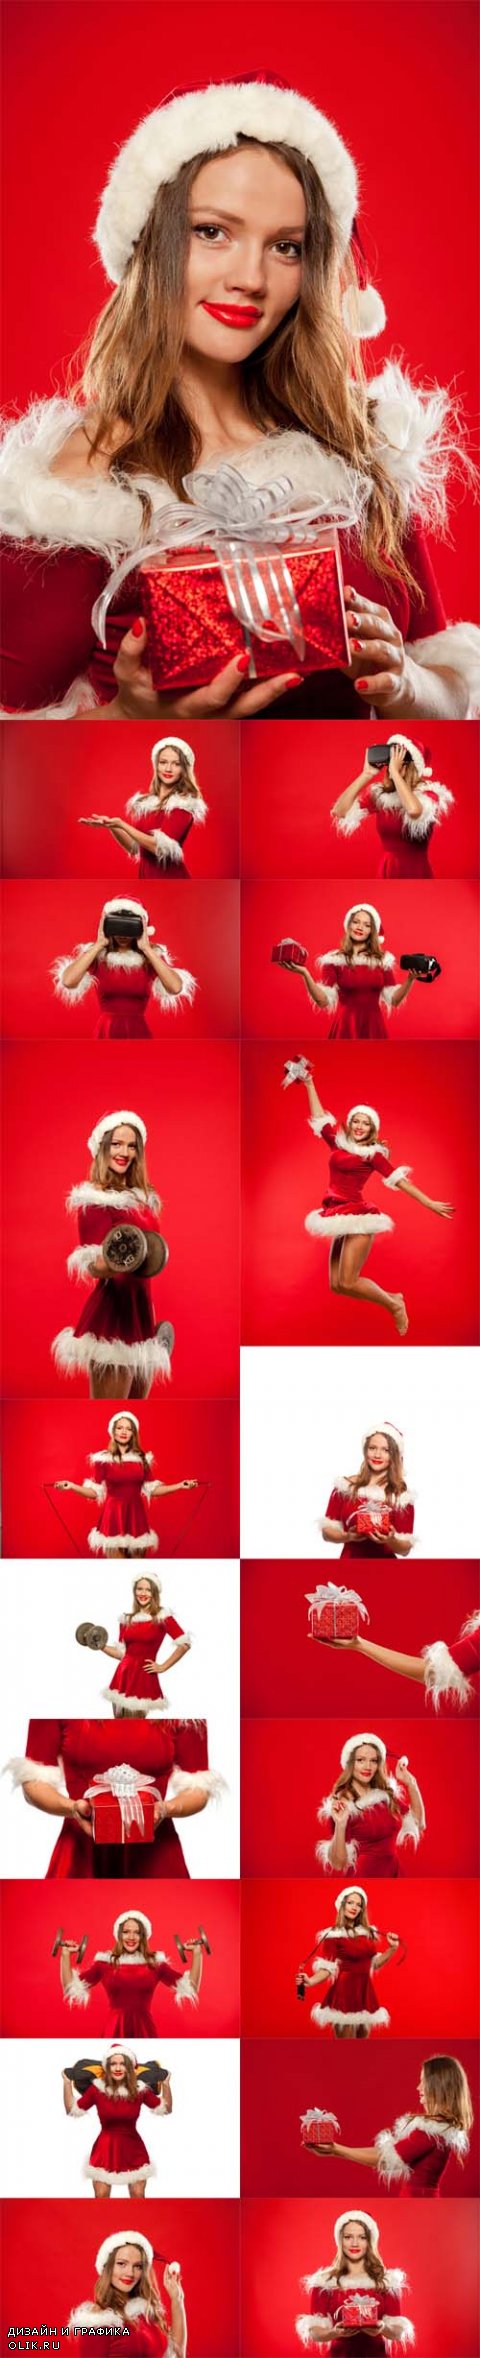 Photo Christmas, x-mas, winter, happiness concept woman in santa helper